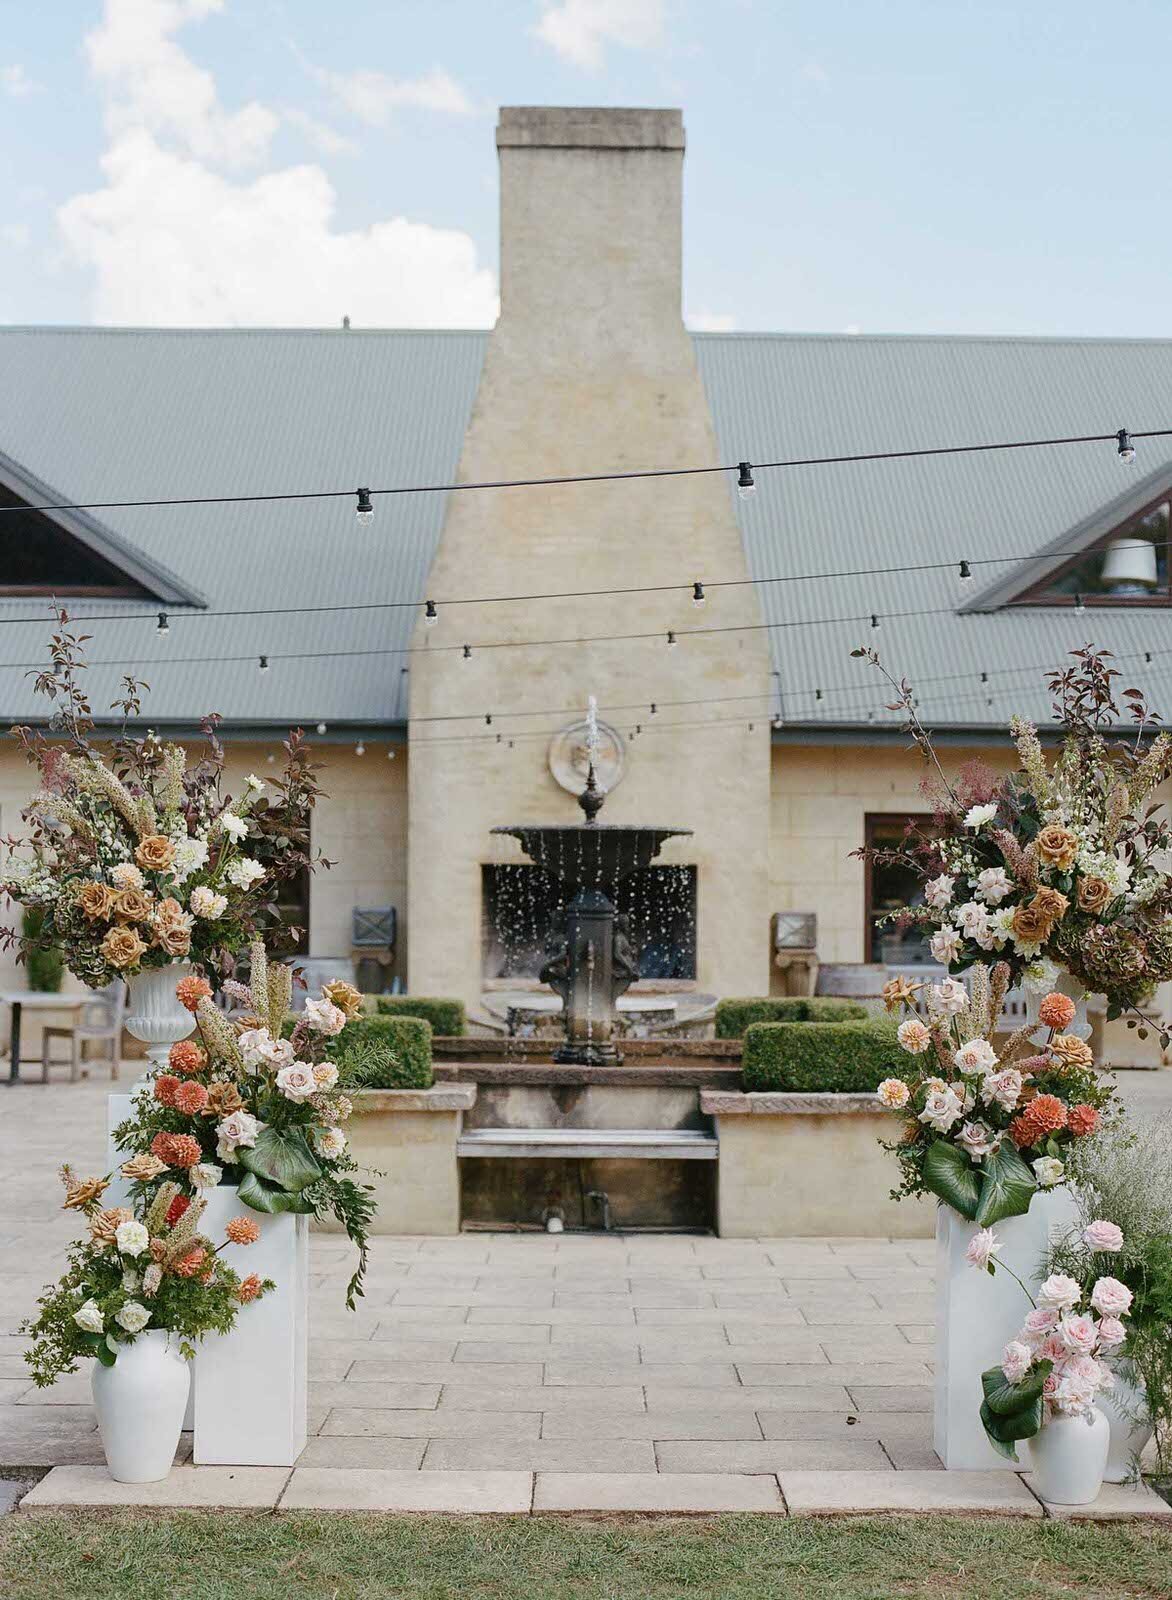 Centennial Vineyards wedding venue and wedding florals